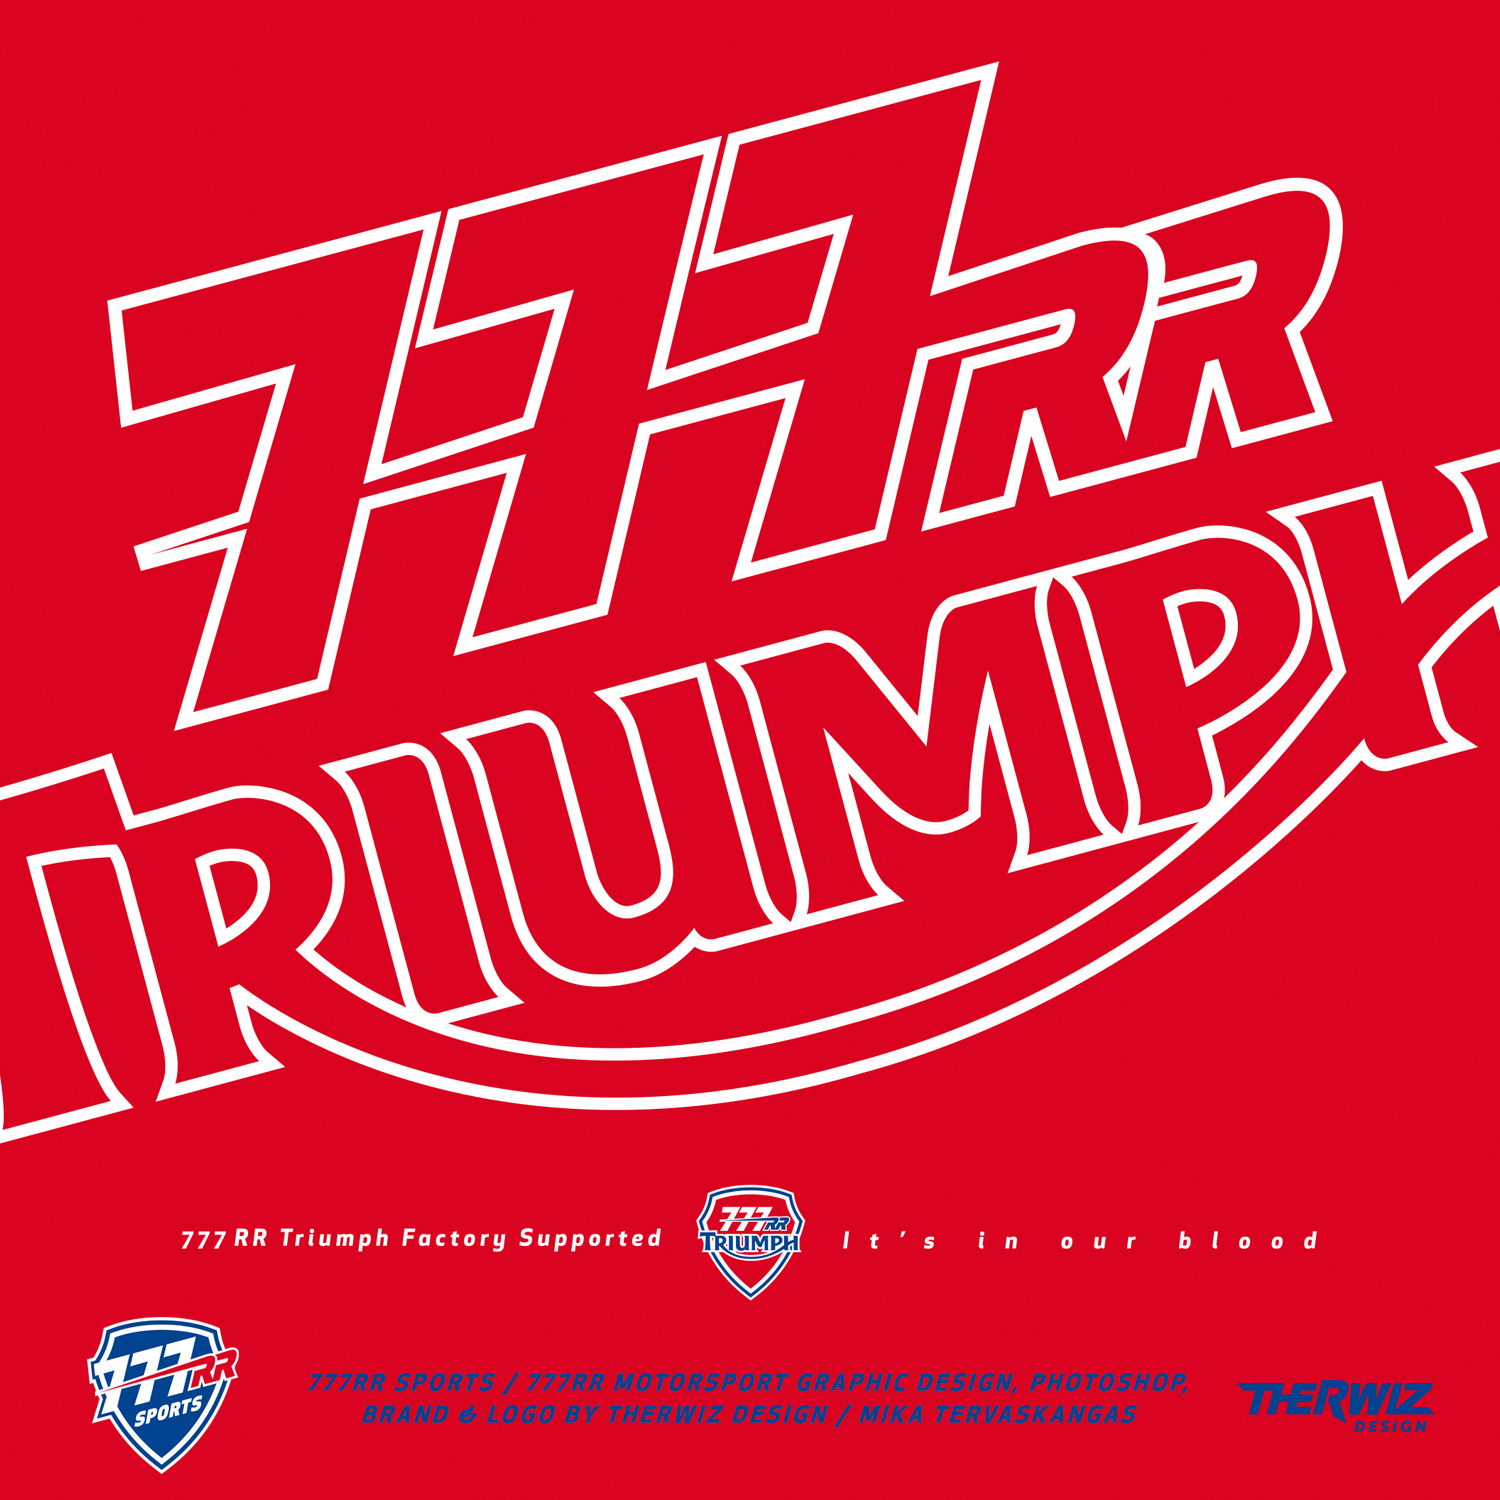 Therwiz Design logon suunnittelu, 777 rr motorsport Triumph logo